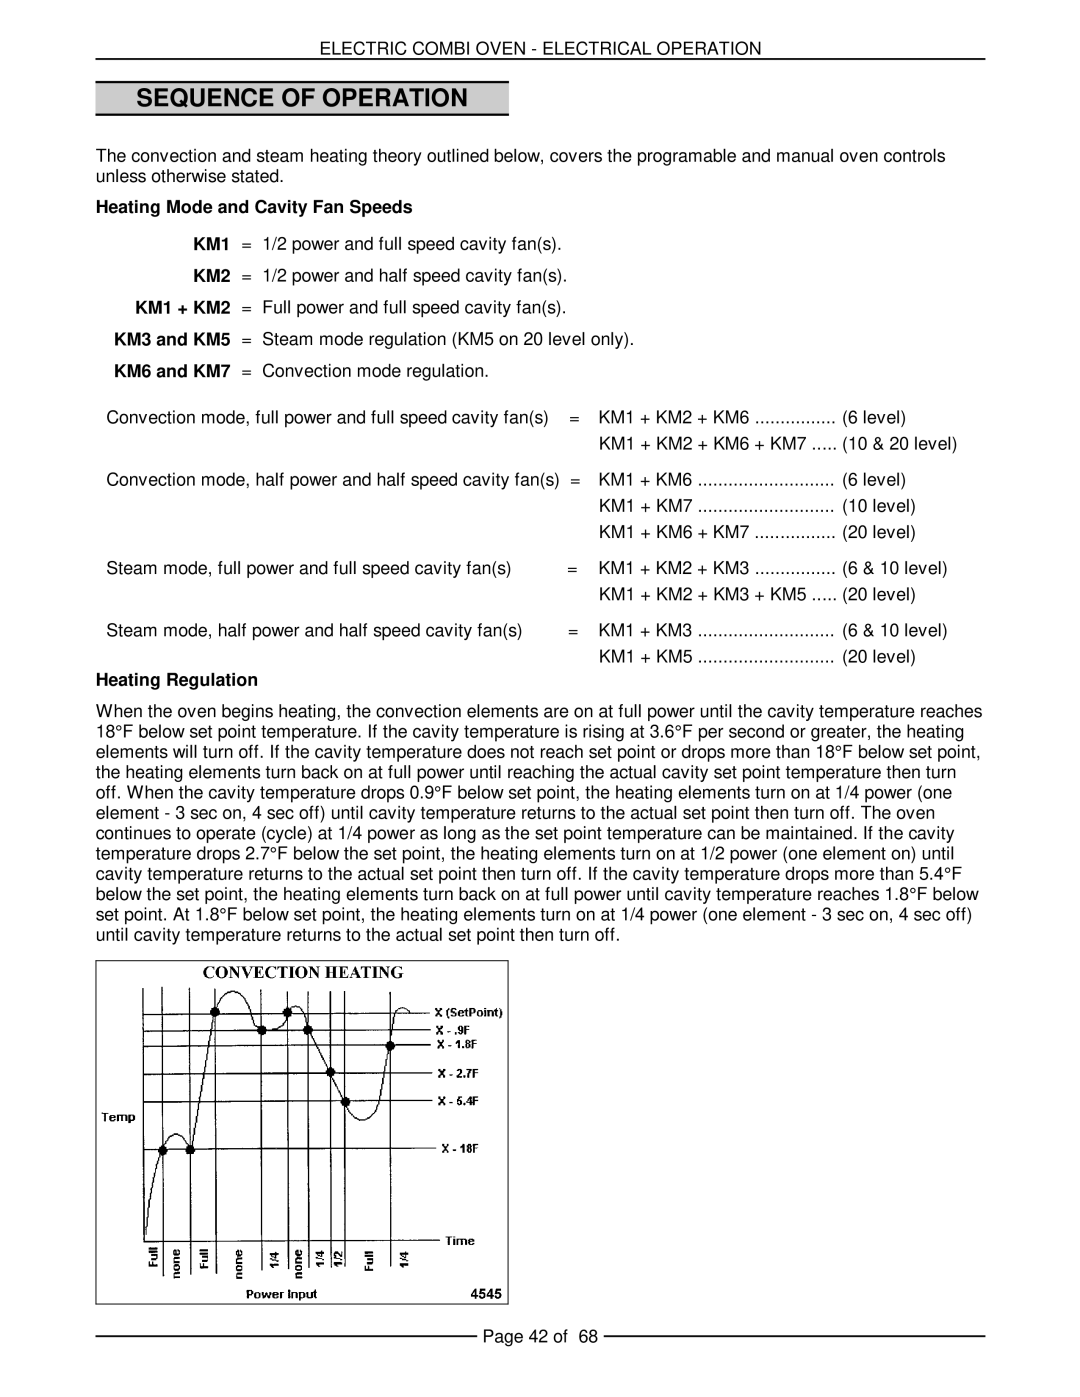 Vulcan-Hart VCE6H 126177, VCE20H 126172 Sequence Of Operation, Heating Mode and Cavity Fan Speeds, Heating Regulation 